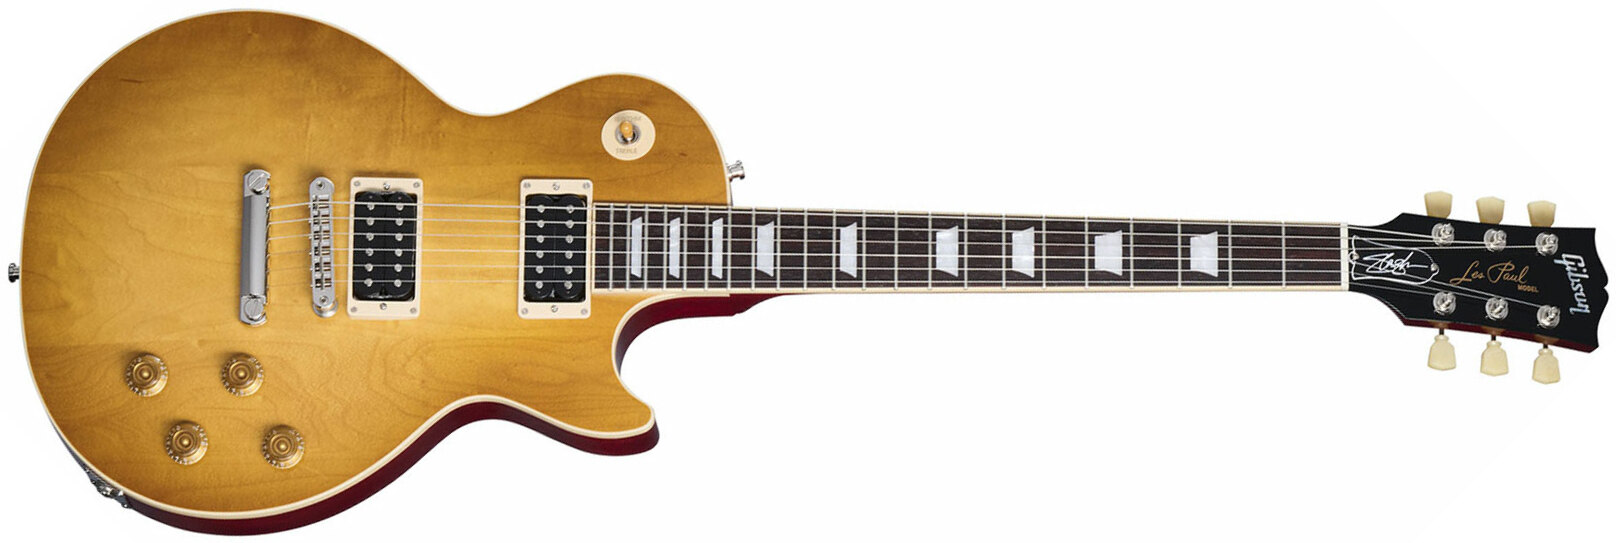 Gibson Slash Les Paul Standard Jessica Signature 2h Ht Rw - Honey Burst With Red Back - Enkel gesneden elektrische gitaar - Main picture